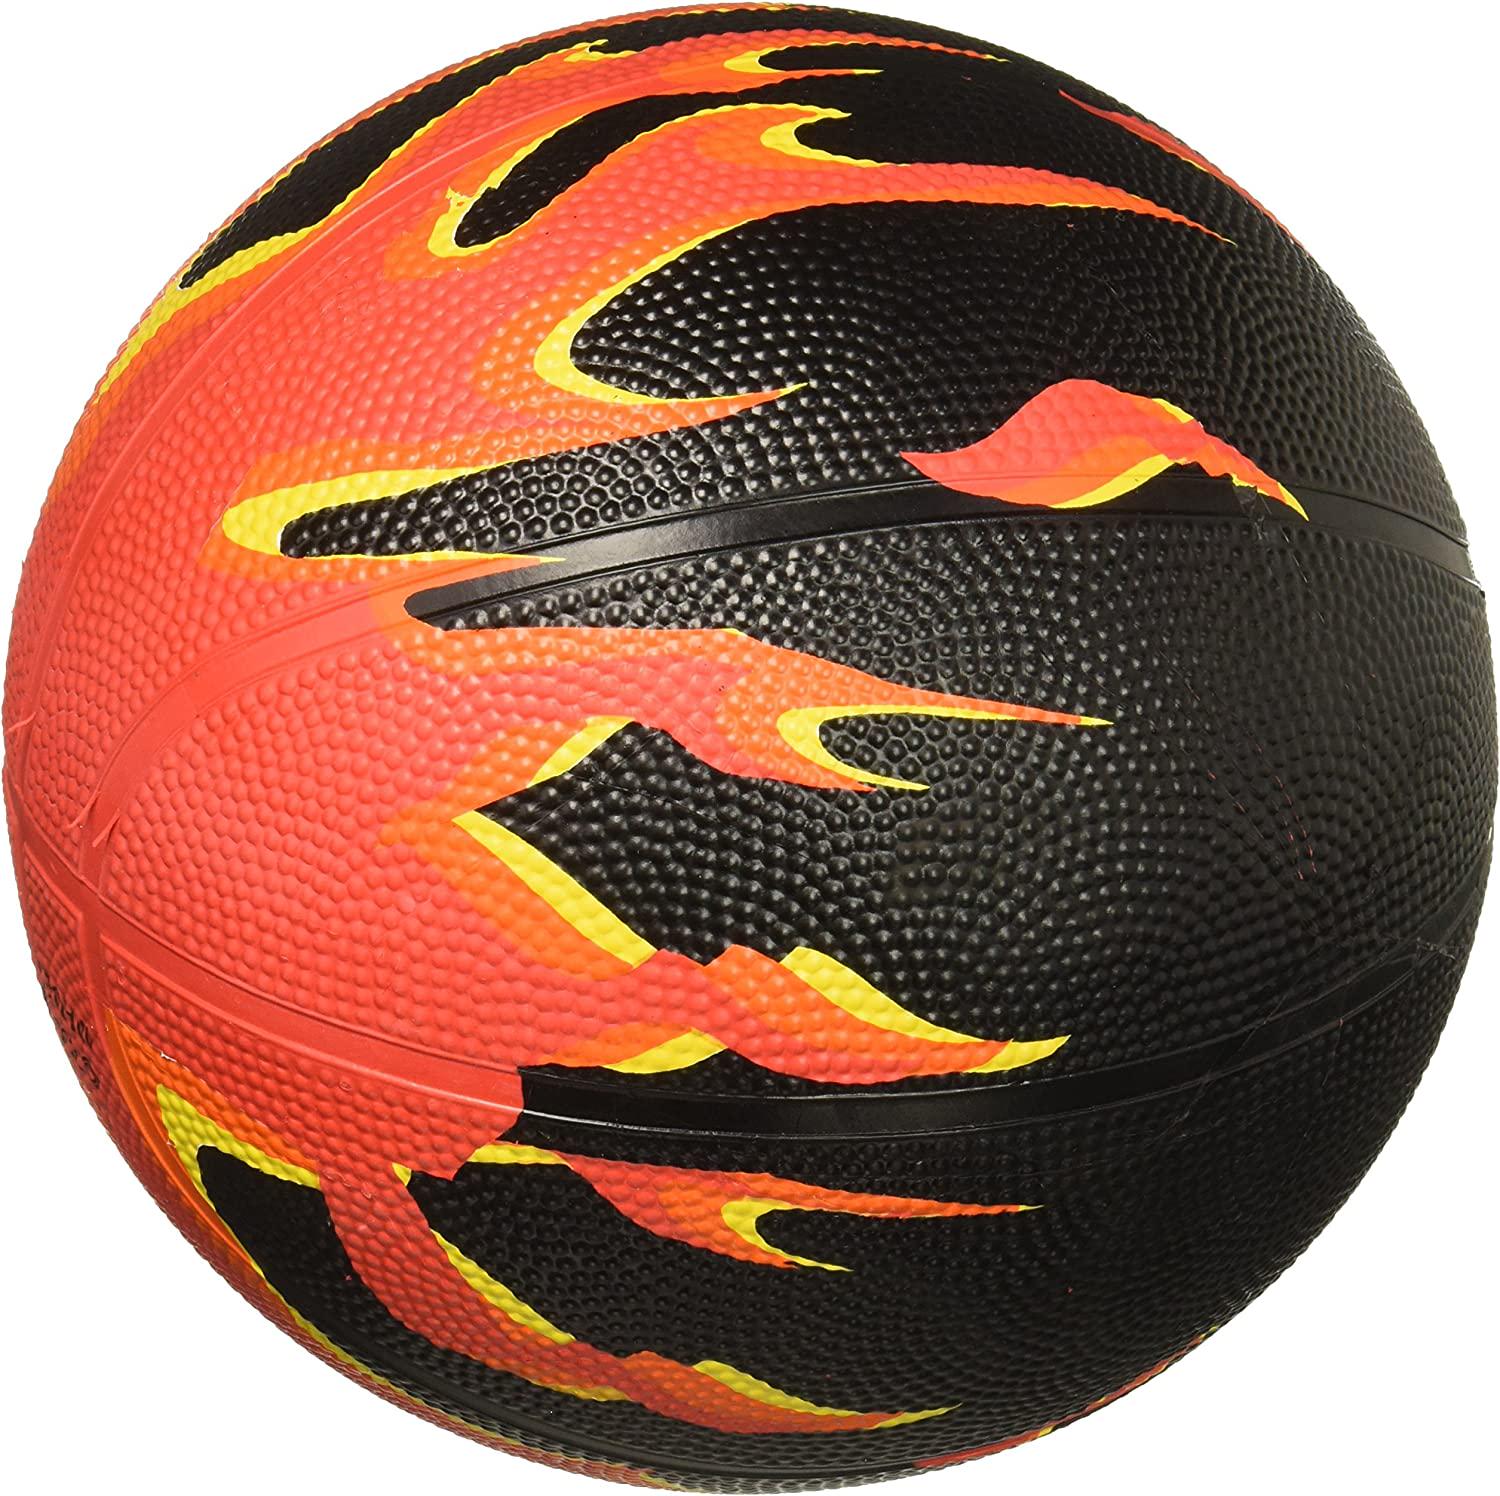 Rhode Island Novelty, Flames Mini Basketball (1 pc)